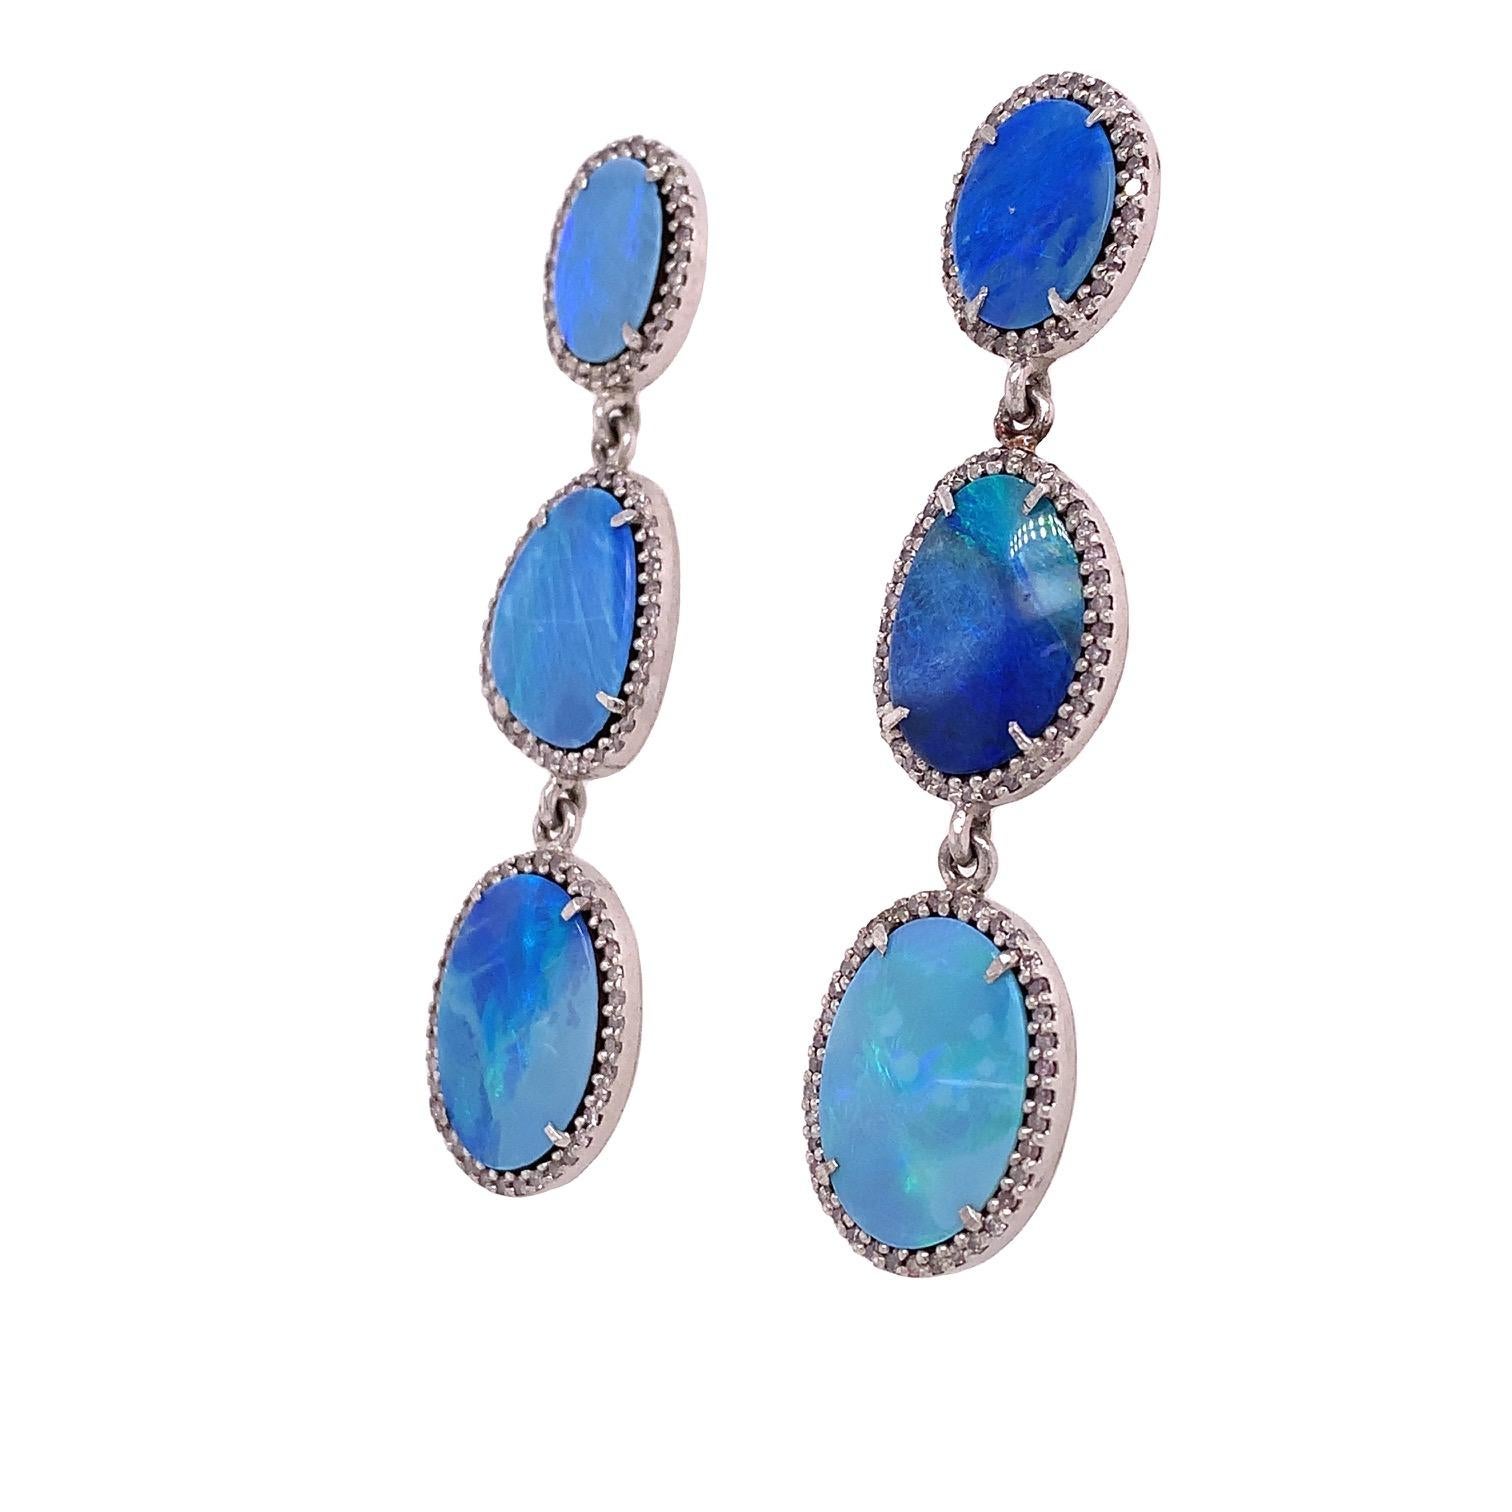 Life In Color Kollektion 

Himmelblauer australischer Opal mit rustikalen Diamanten in Sterlingsilber gefasst.

Opal: Gesamtgewicht 12,10 Karat.
Diamanten: 0,73 Karat Gesamtgewicht.
